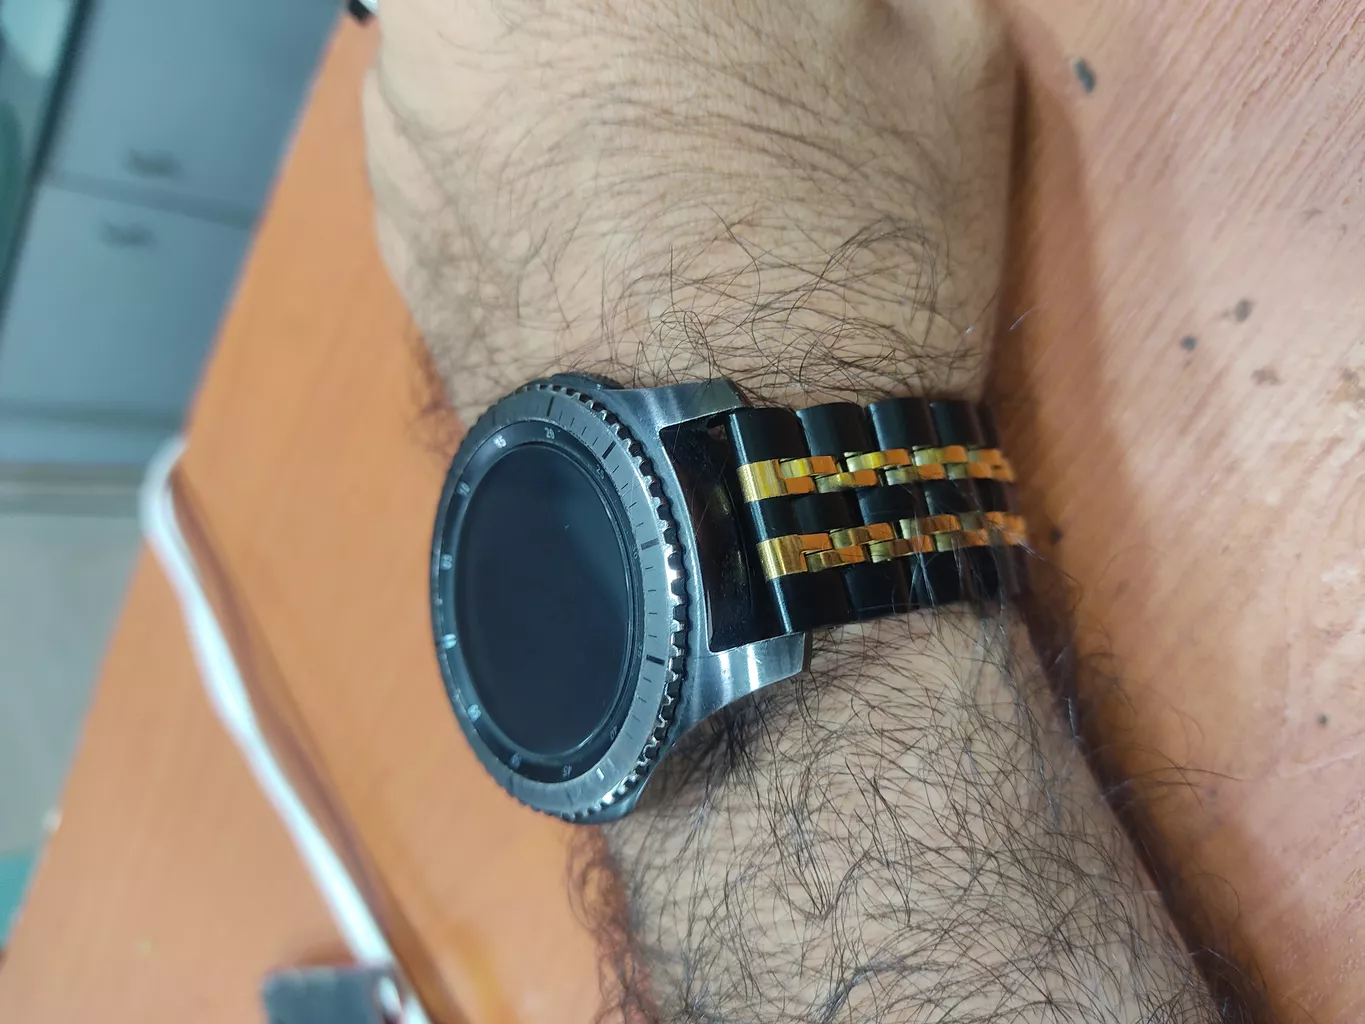 بند تراستکتور مدل Pirana مناسب برای ساعت هوشمند سامسونگ Gear s3 / Watch 3 size 45mm/ Galaxy watch 46mm / S3 frontier/ S3 Classic